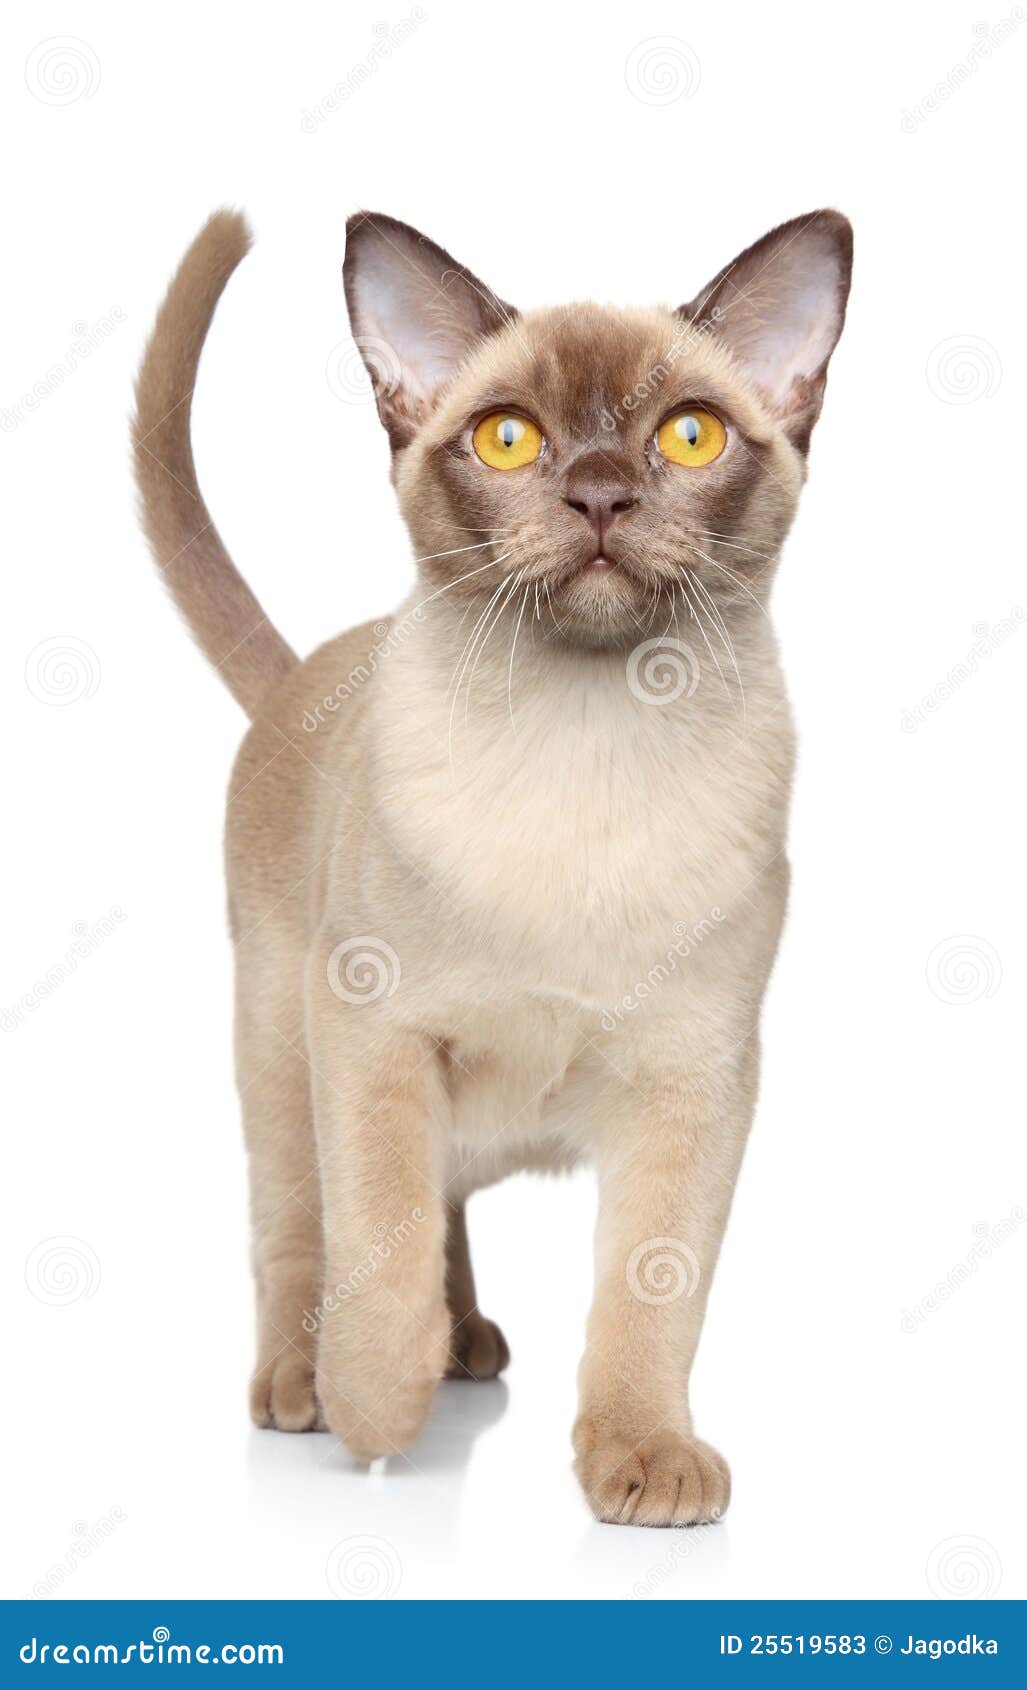 burmese cat on white background